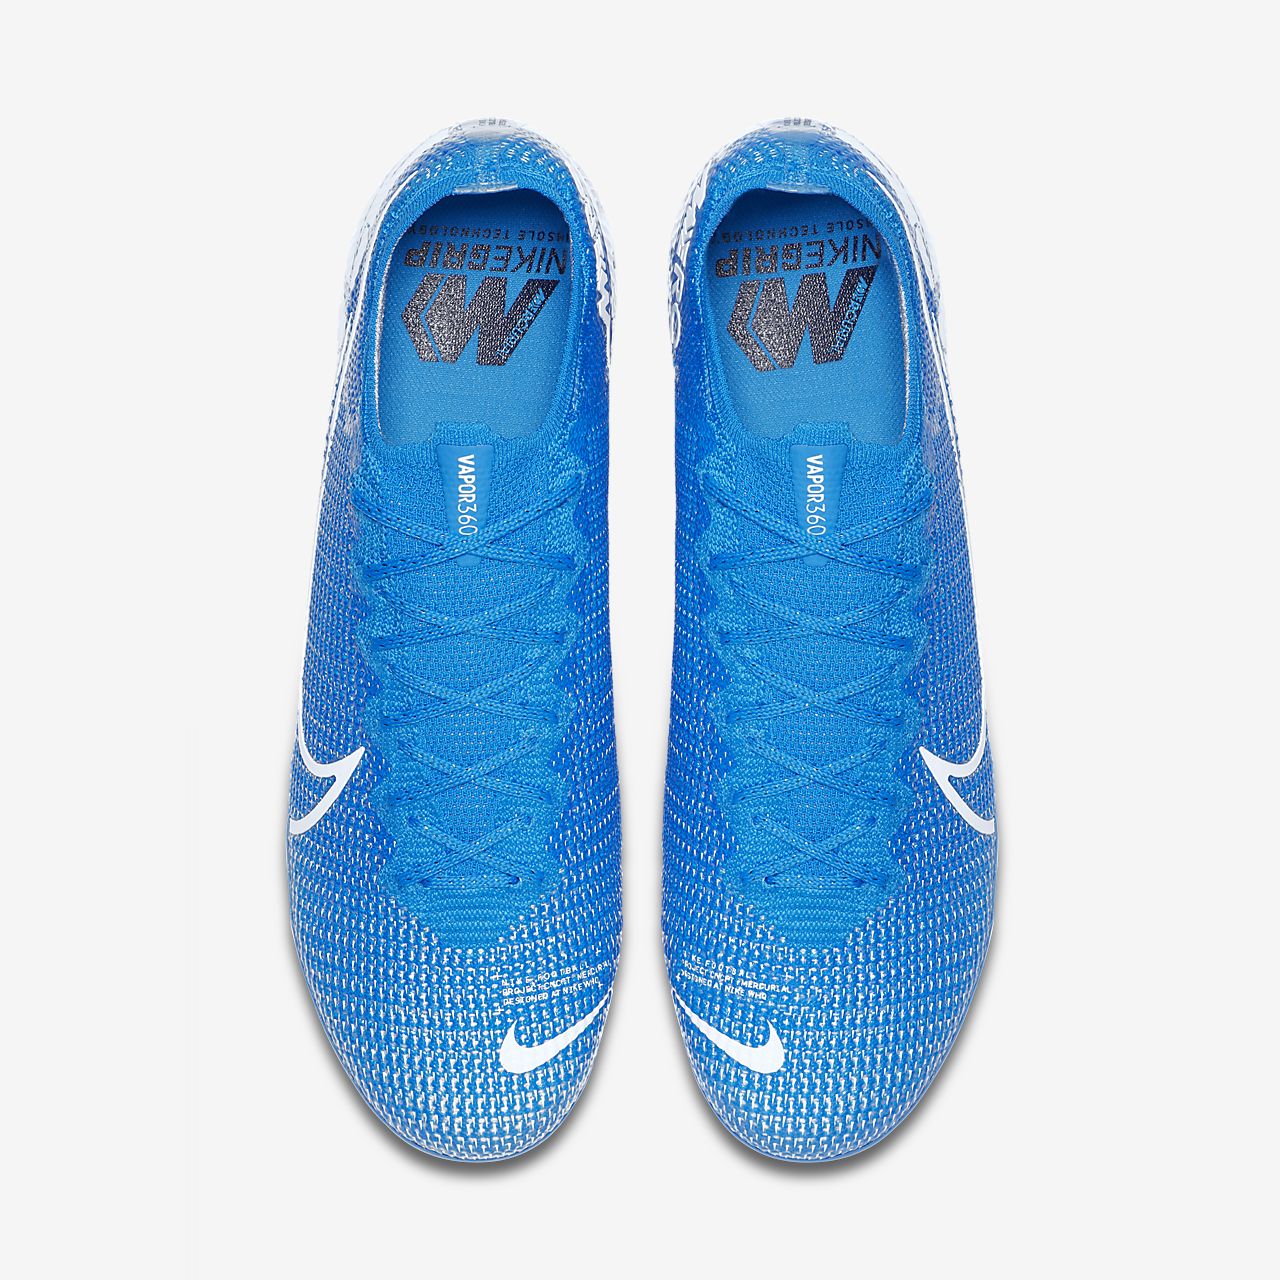 Nike Hypervenom Phantom II FG ACC Soccer Cleats Size 9.5